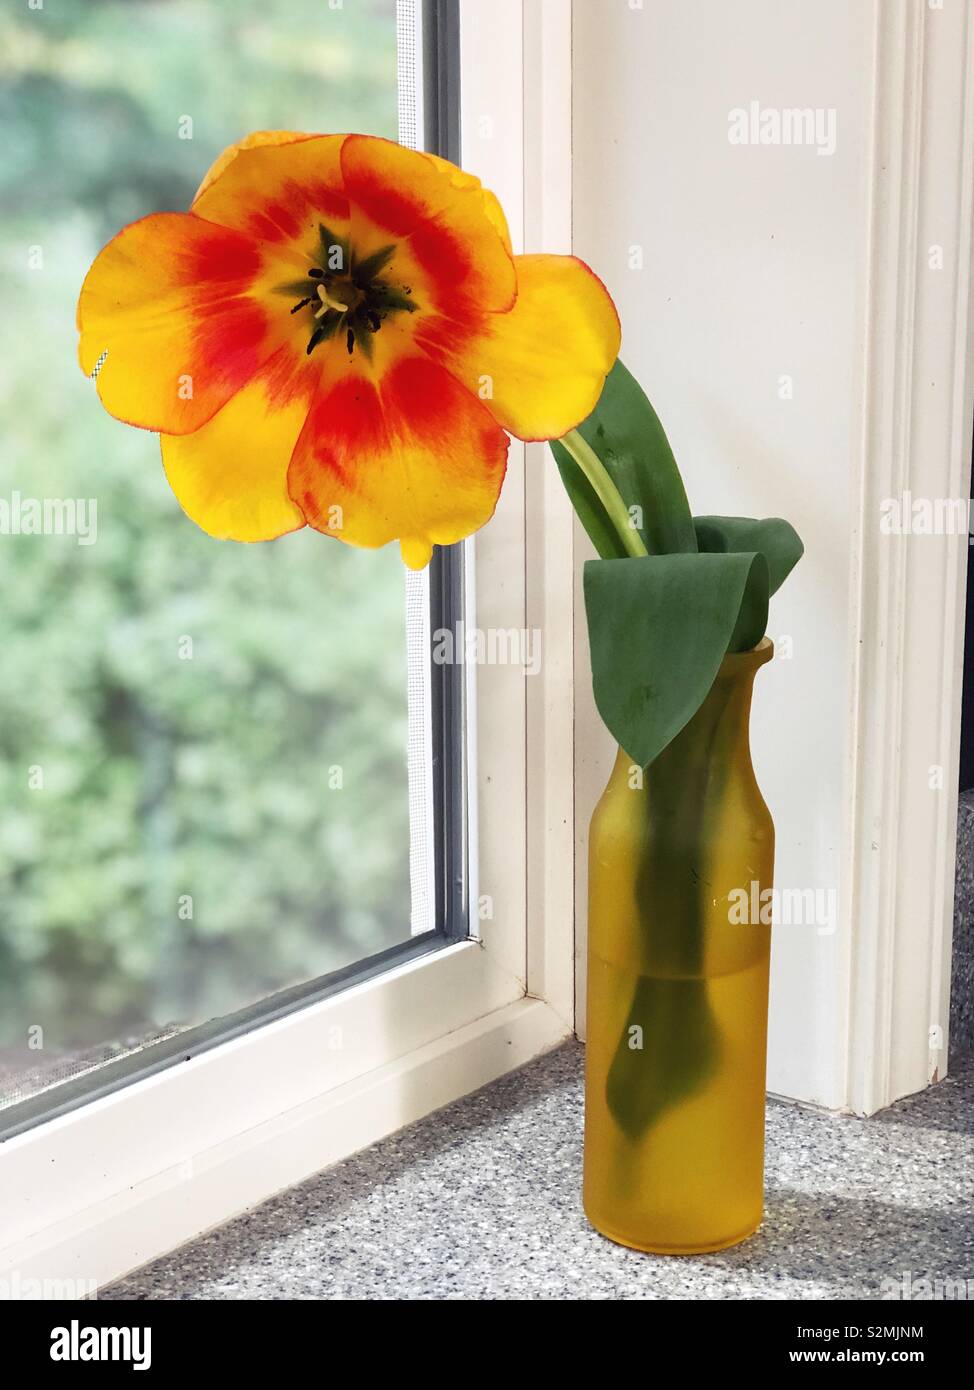 Une tulipe jaune dans un vase jaune. Banque D'Images